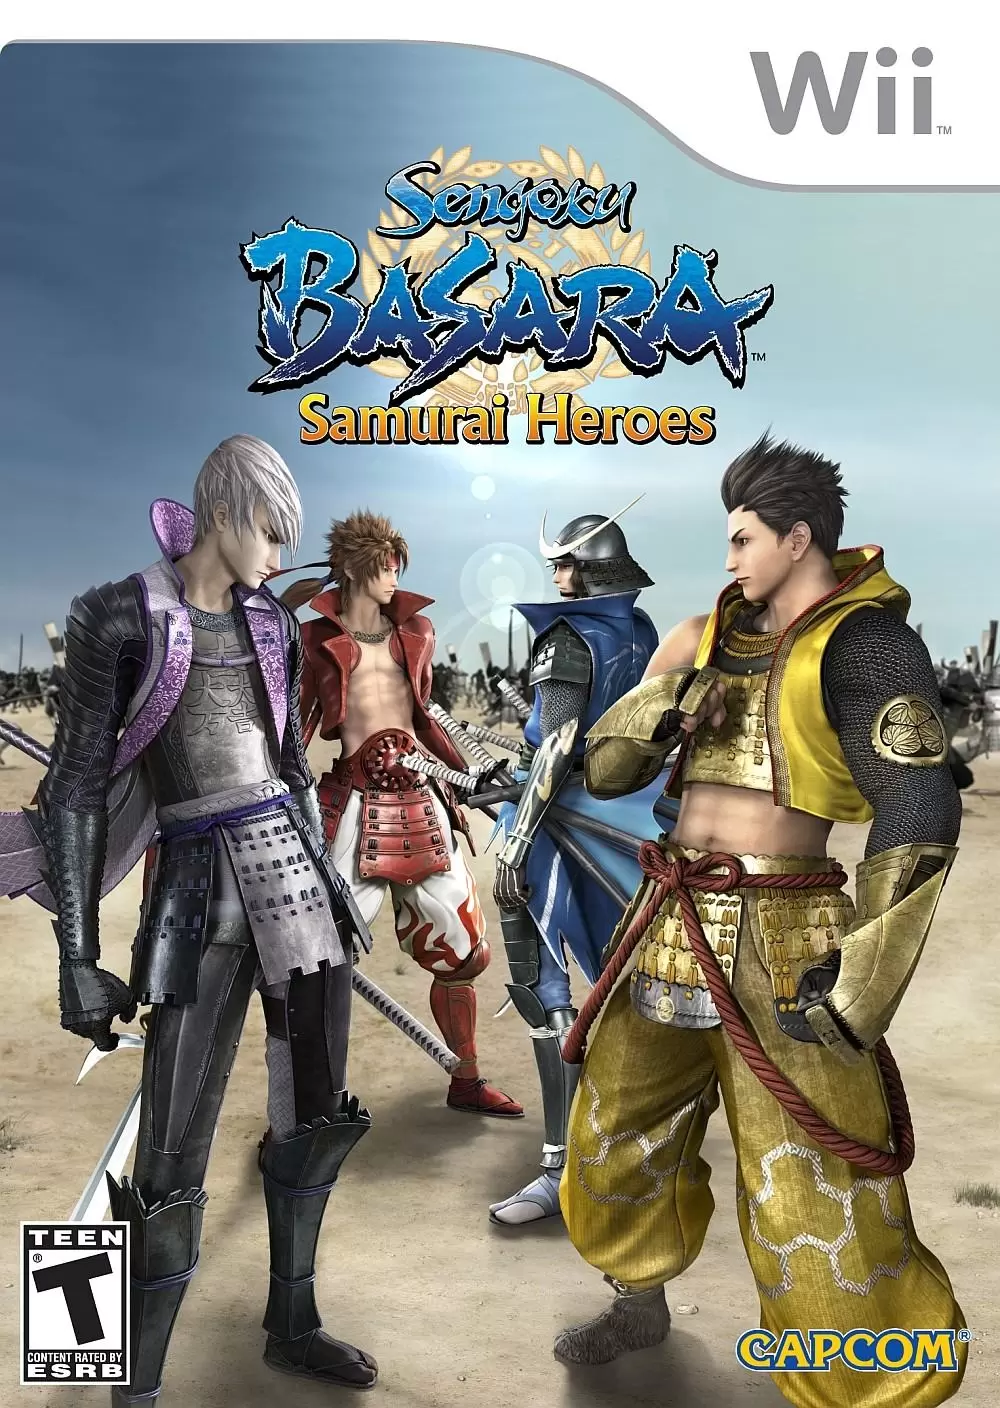 Nintendo Wii Games - Sengoku Basara: Samurai Heroes